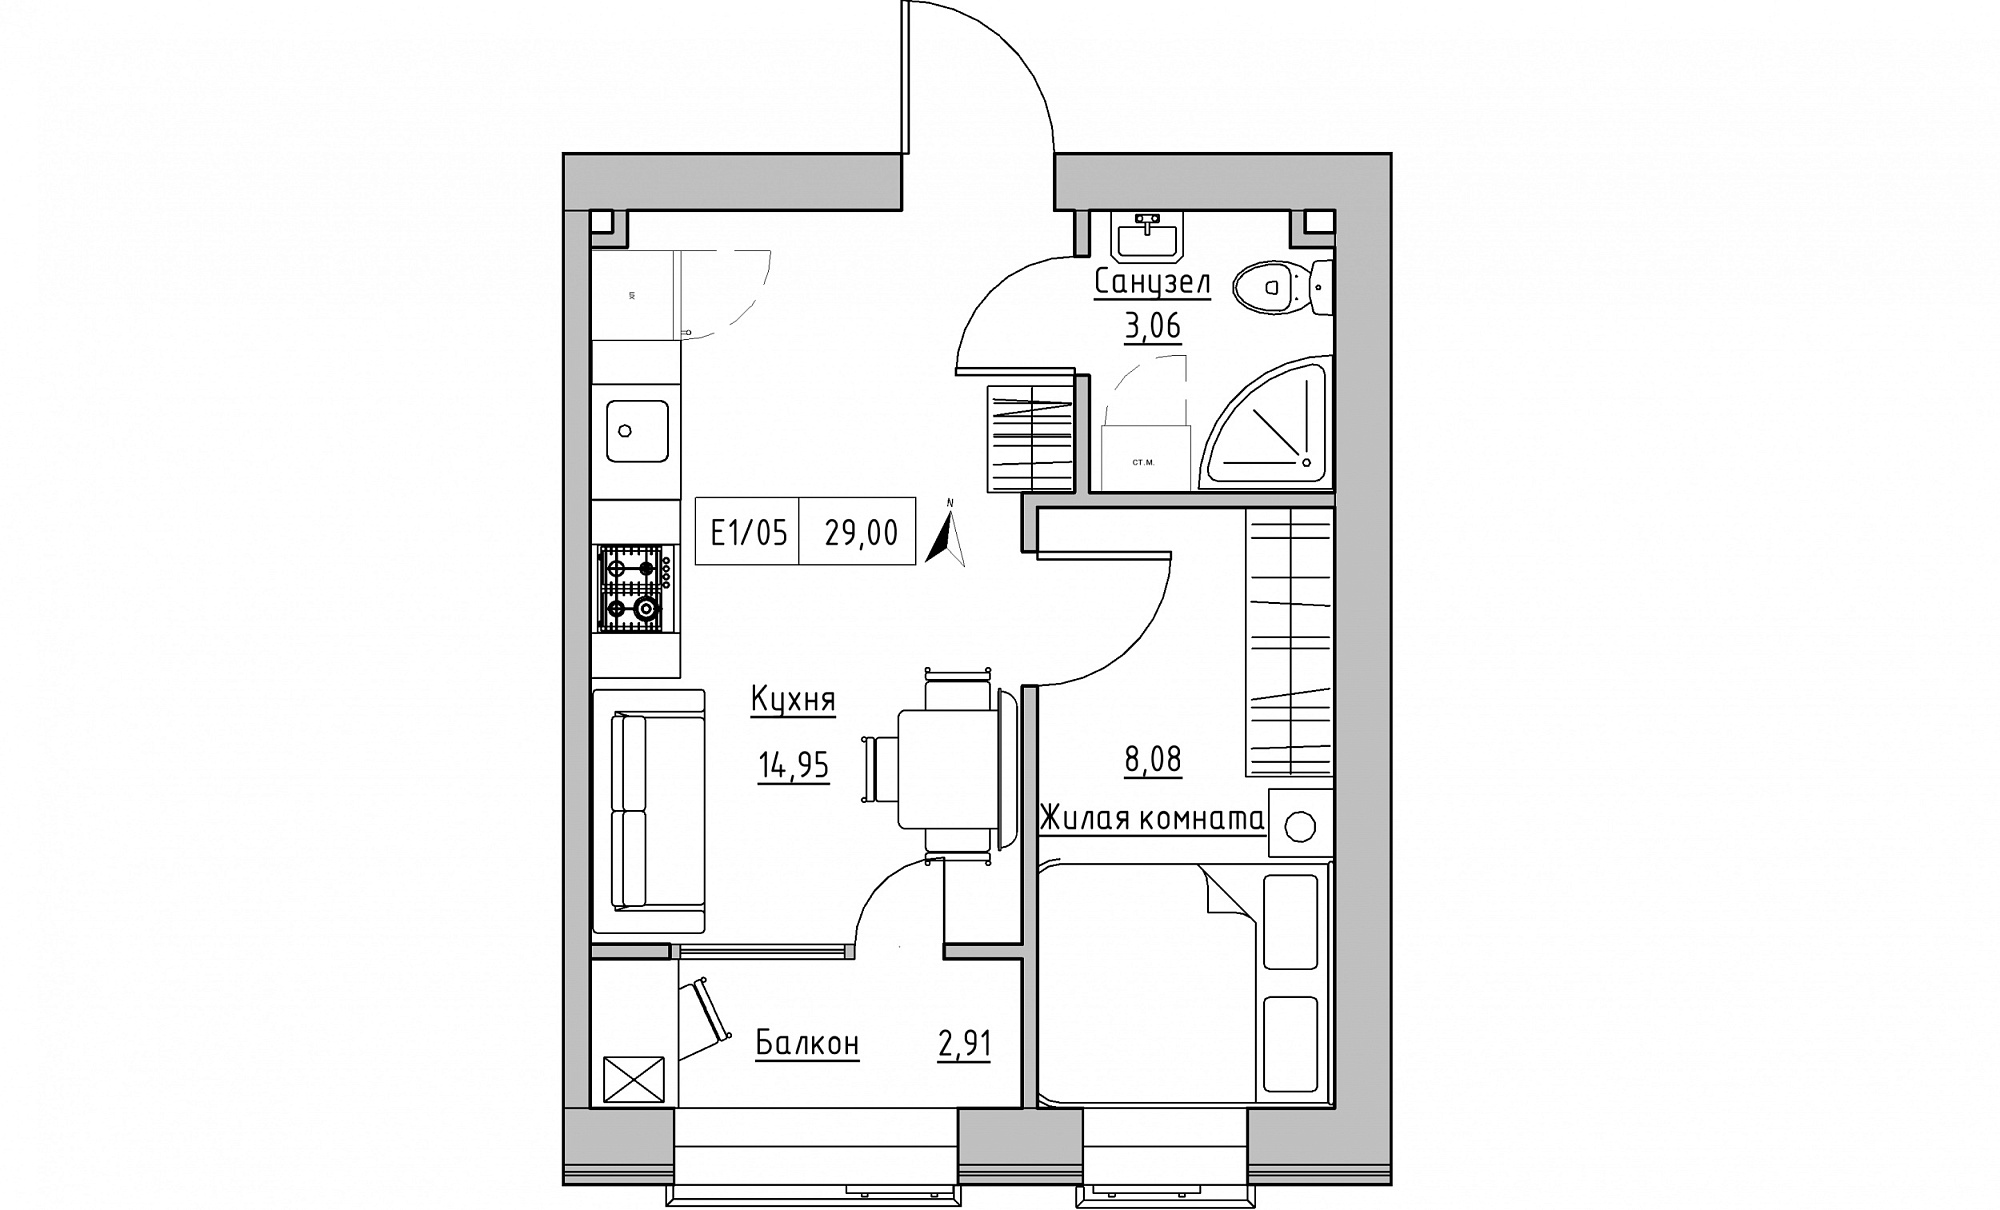 Planning 1-rm flats area 29m2, KS-015-04/0009.